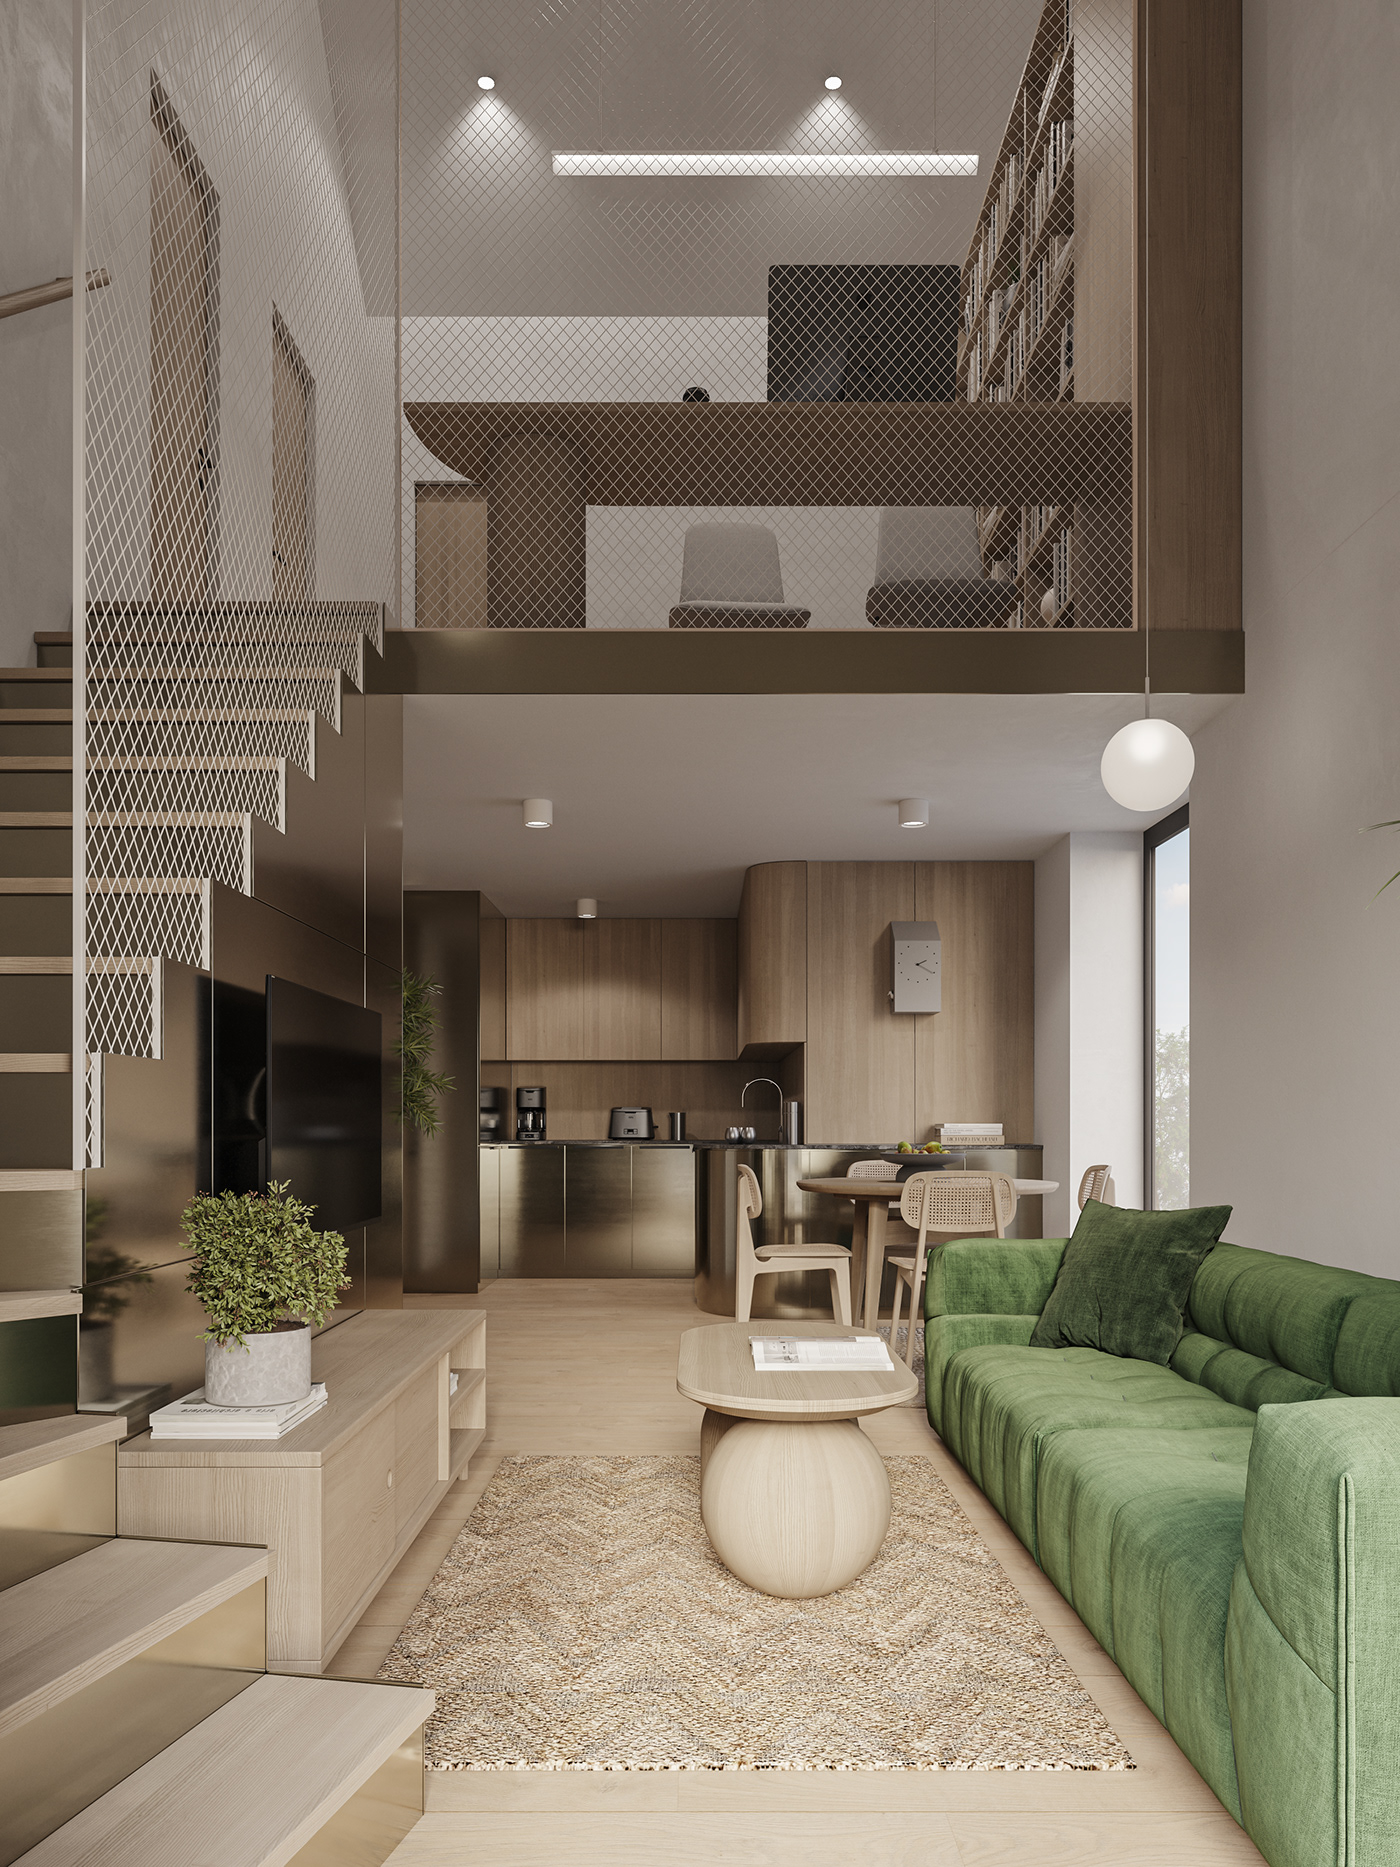 3ds max 3dsmax corona corona render  rendering interior design  Interior living room kitchen Render